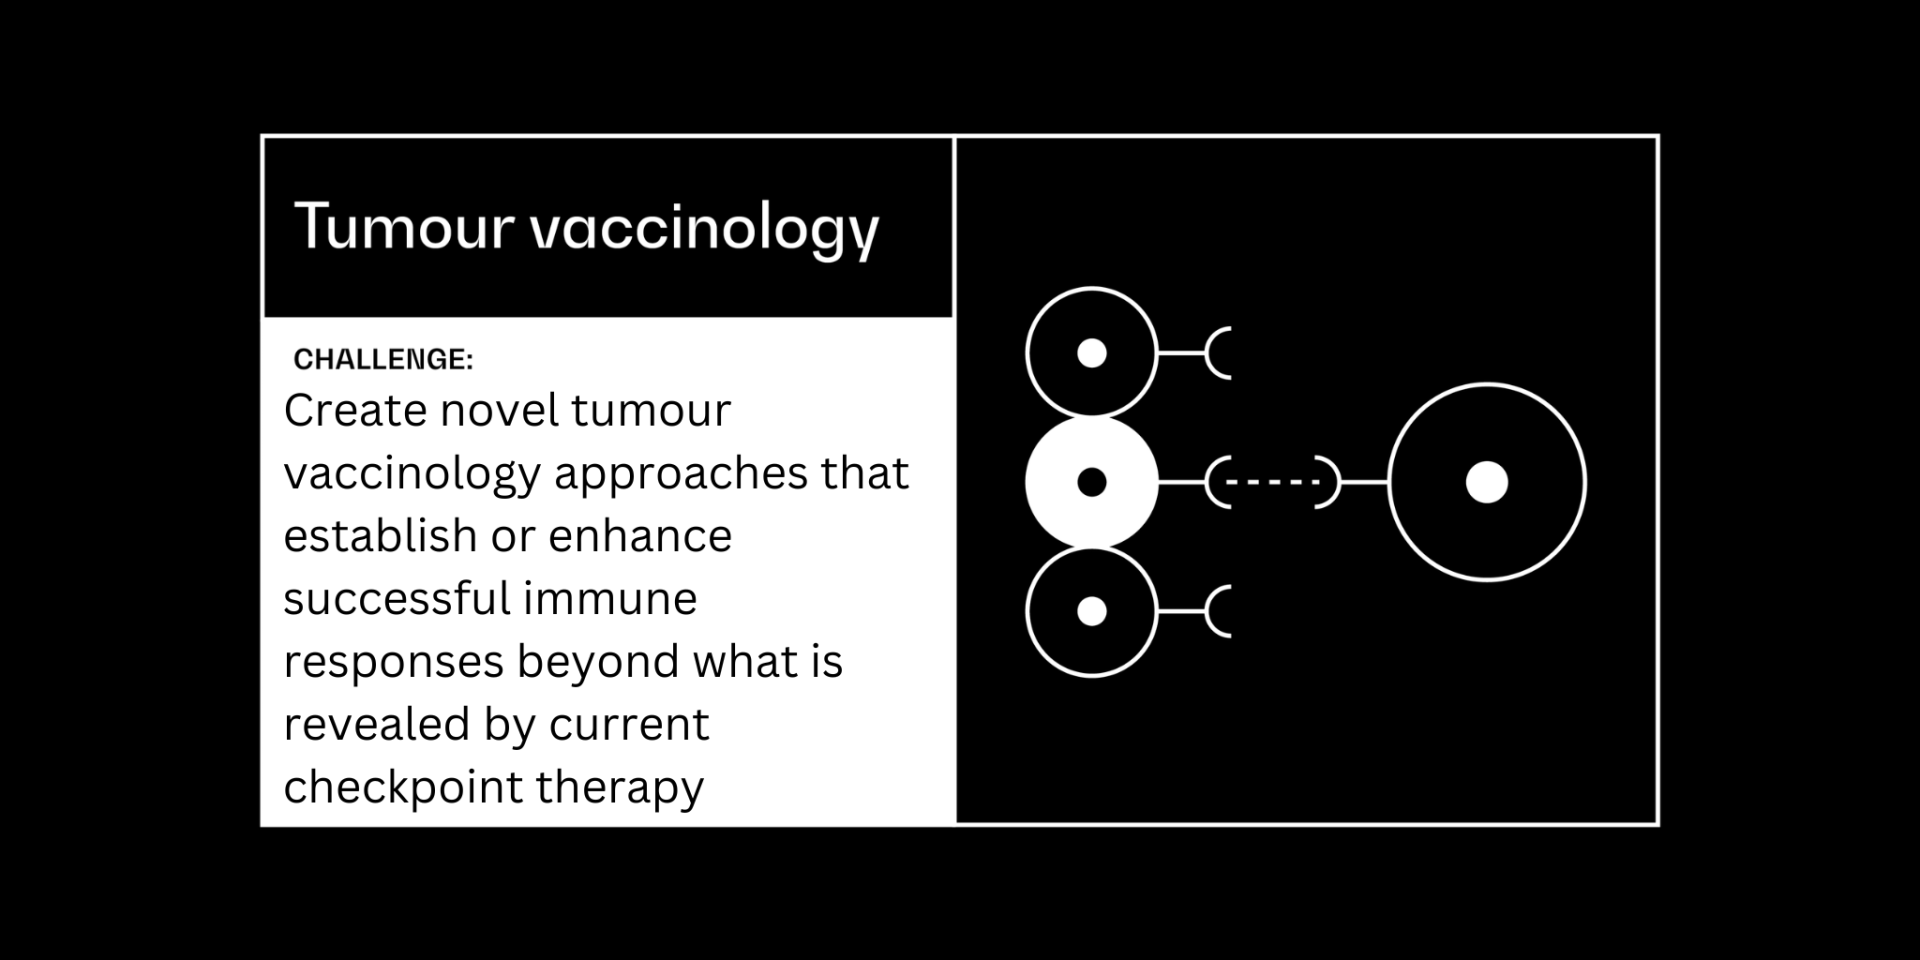 Tumour vaccinology